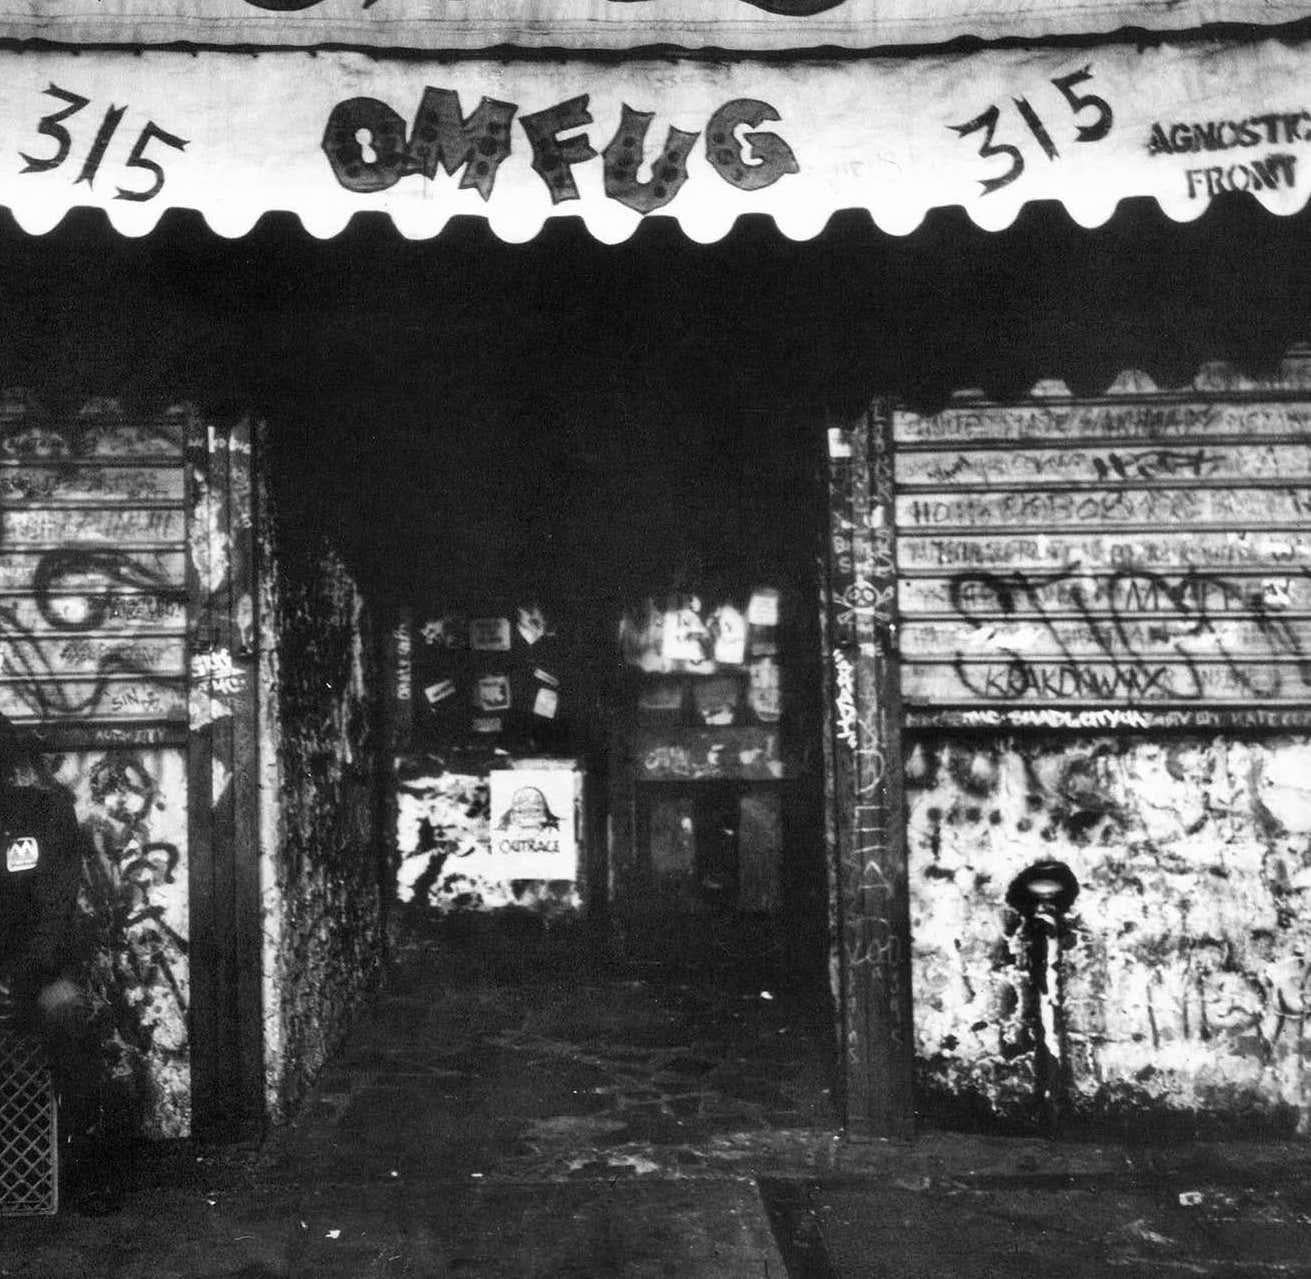 CBGB Photograph New York, 1982 (East Village 1980s)  1